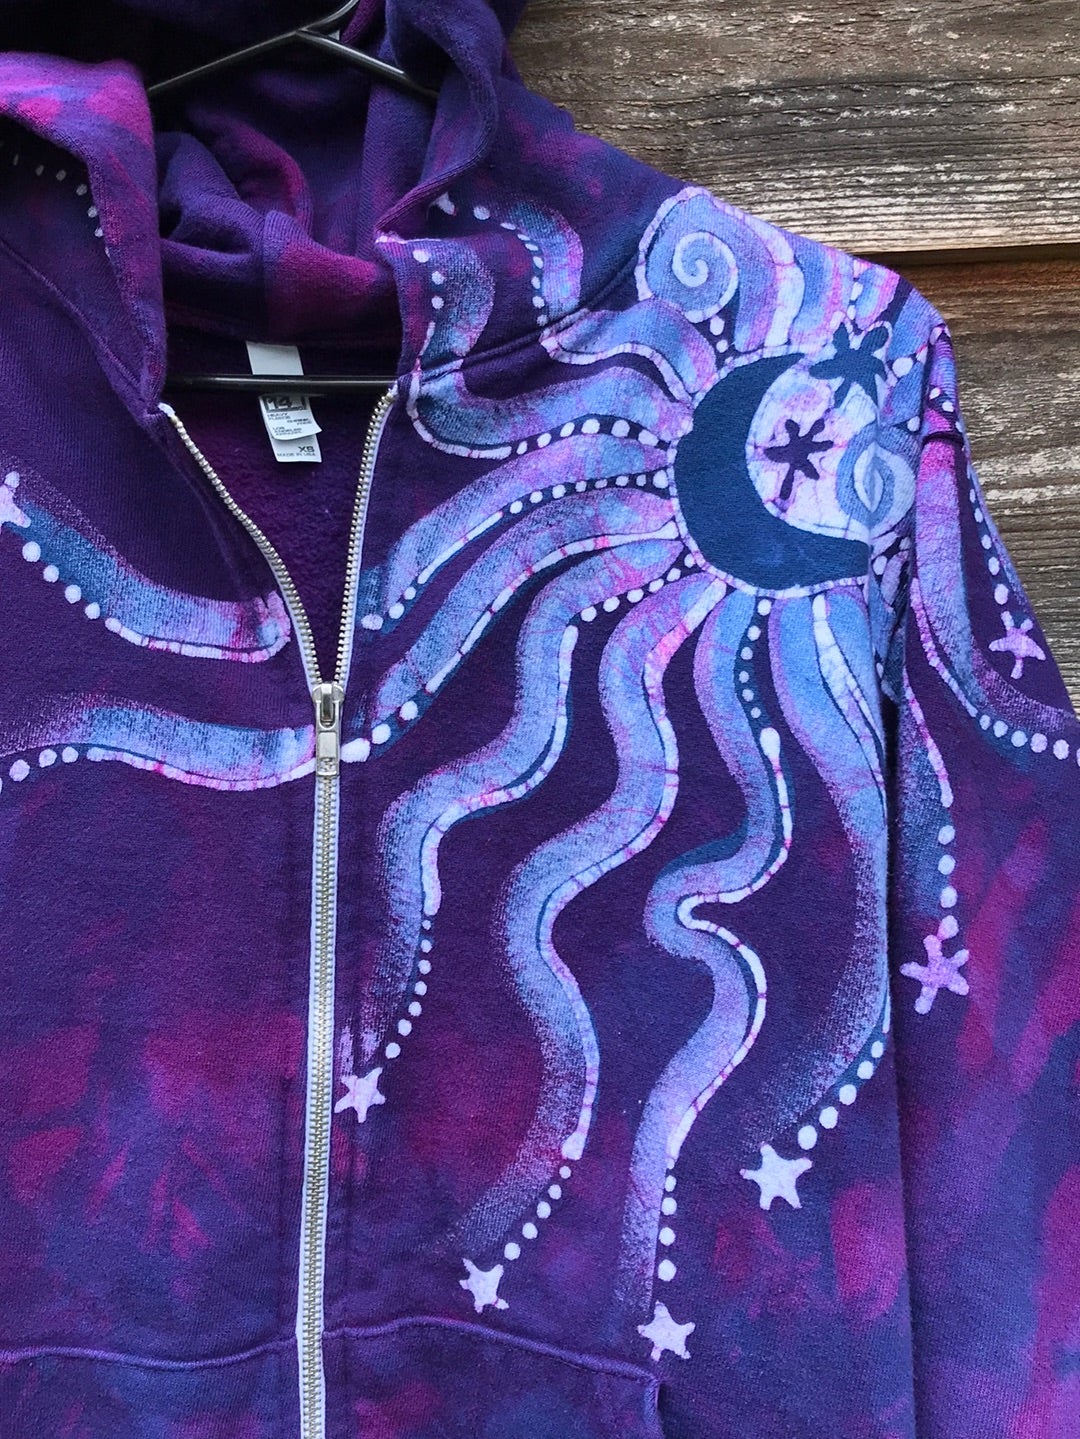 Purple Magenta Moon and Star Handcrafted Batik Zipper Hoodie - Size XS hoodie batikwalla 